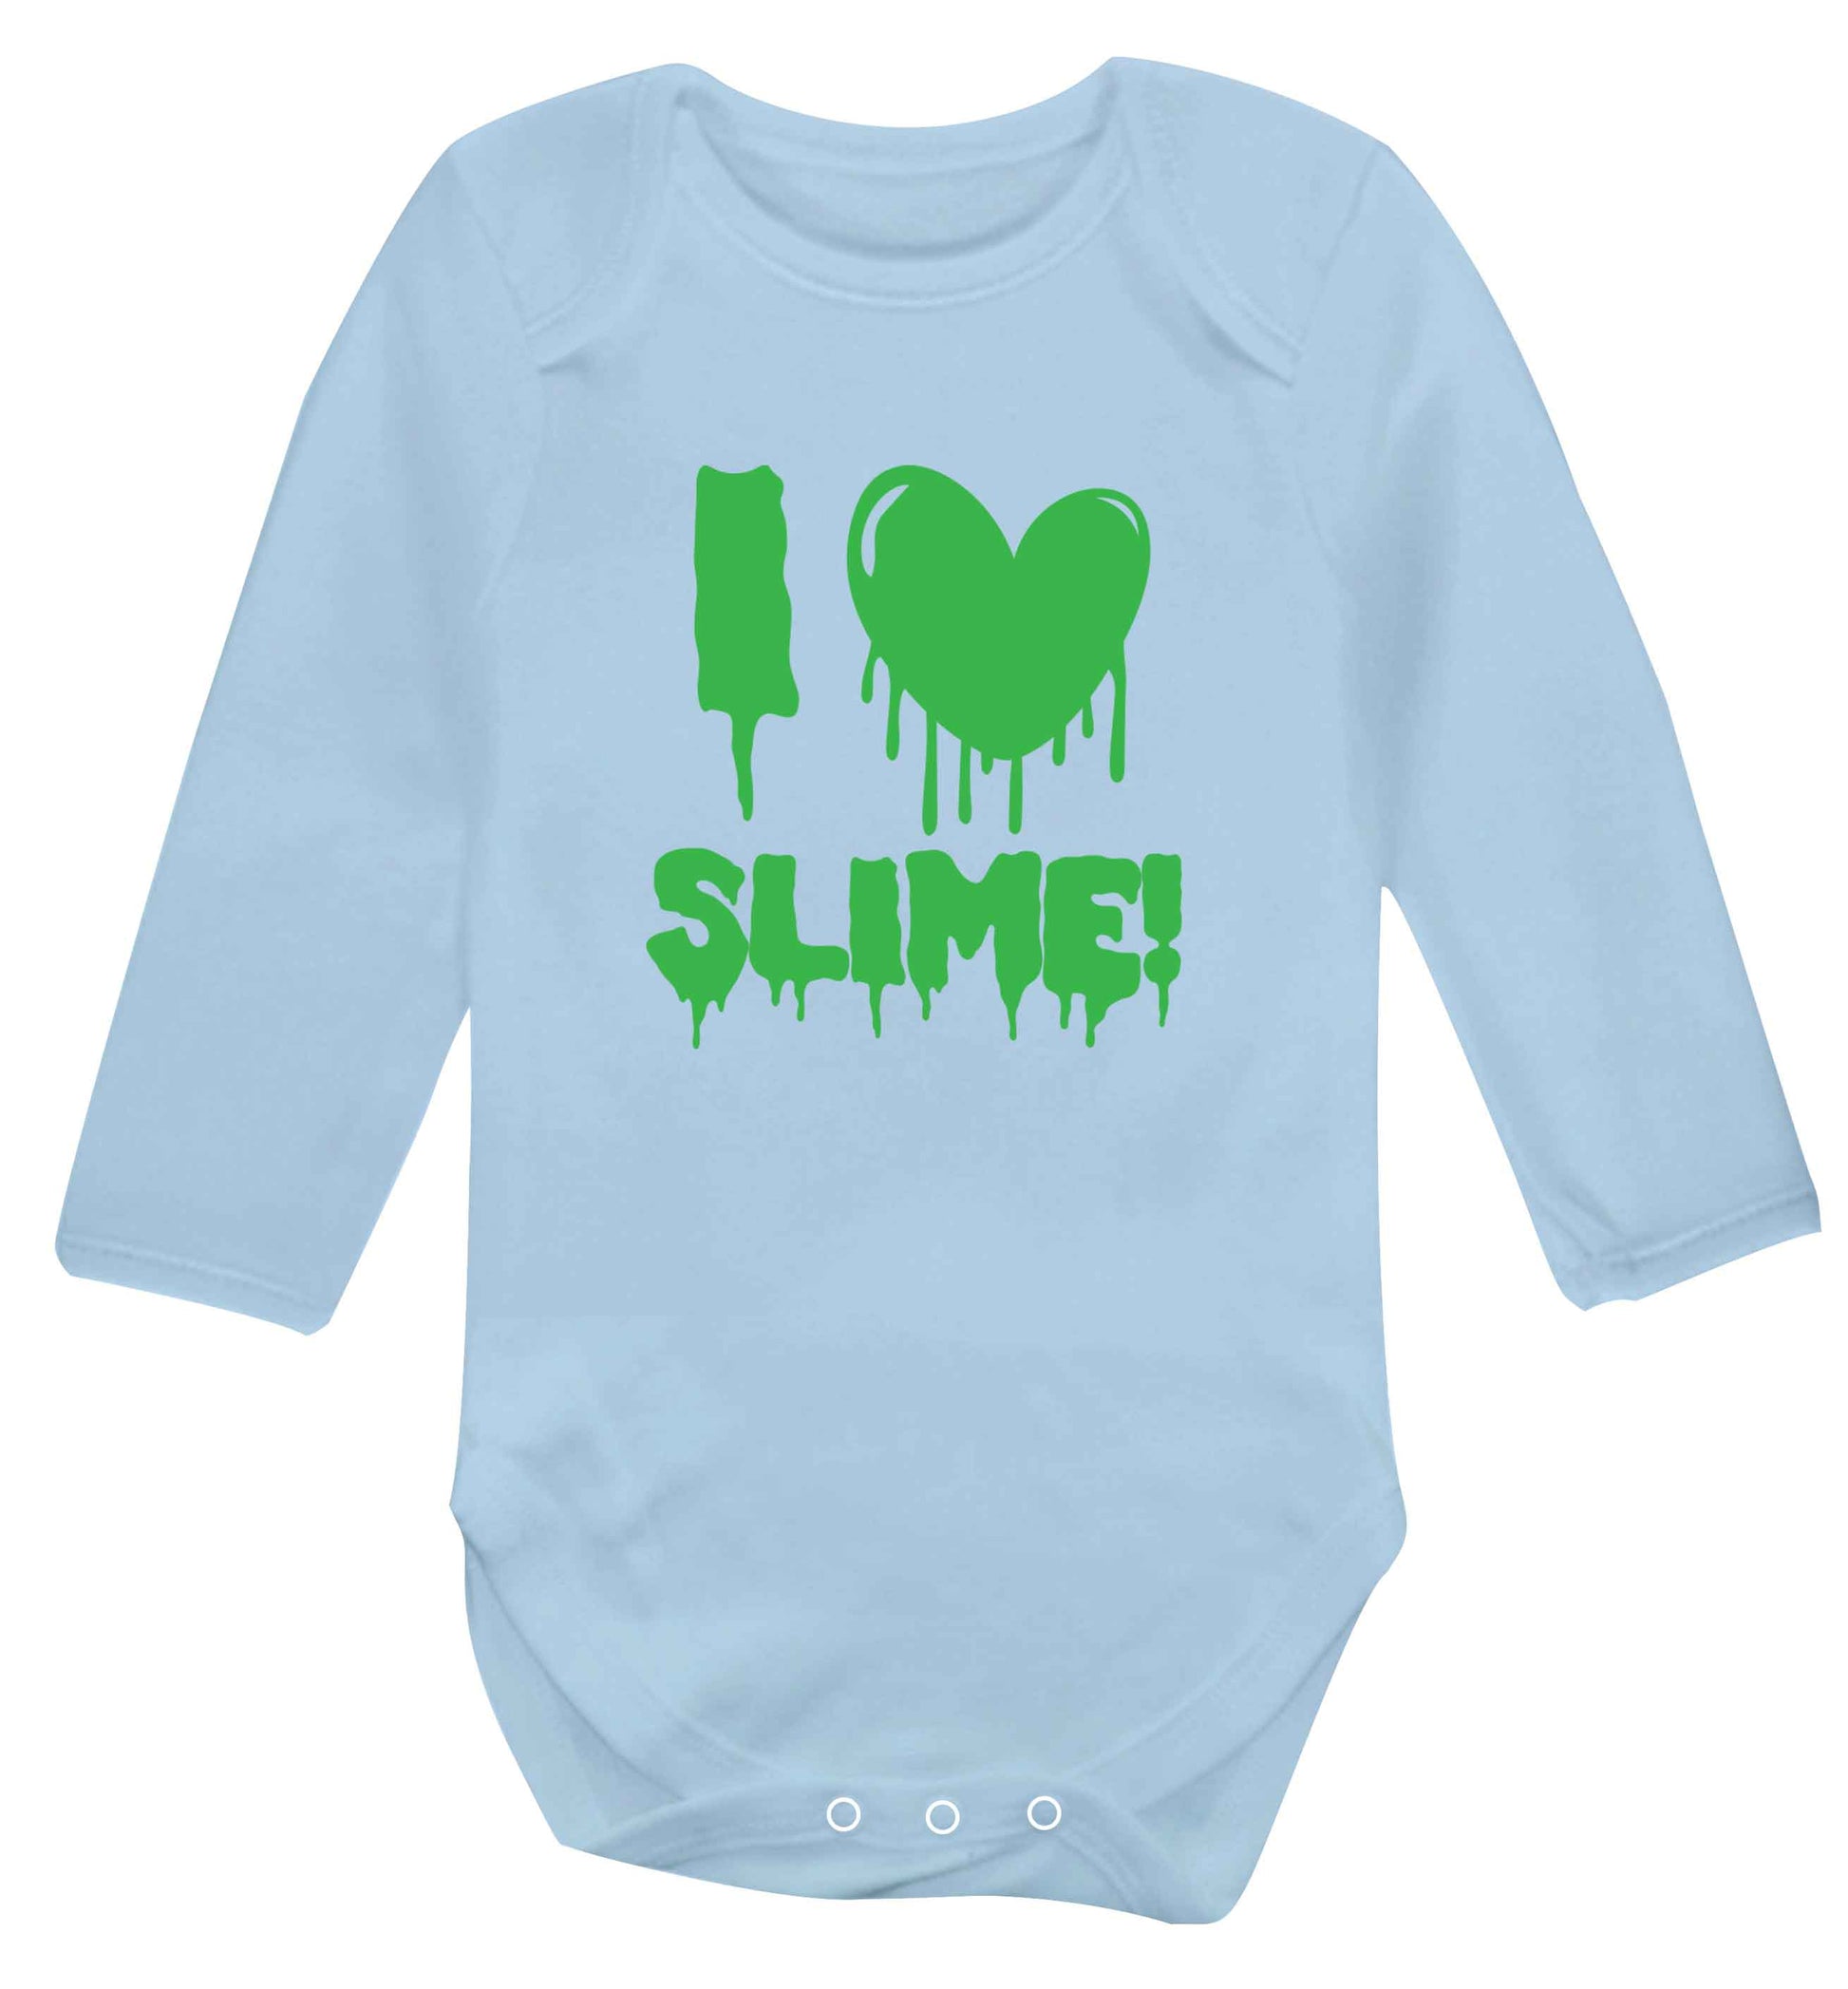 Neon green I love slime baby vest long sleeved pale blue 6-12 months